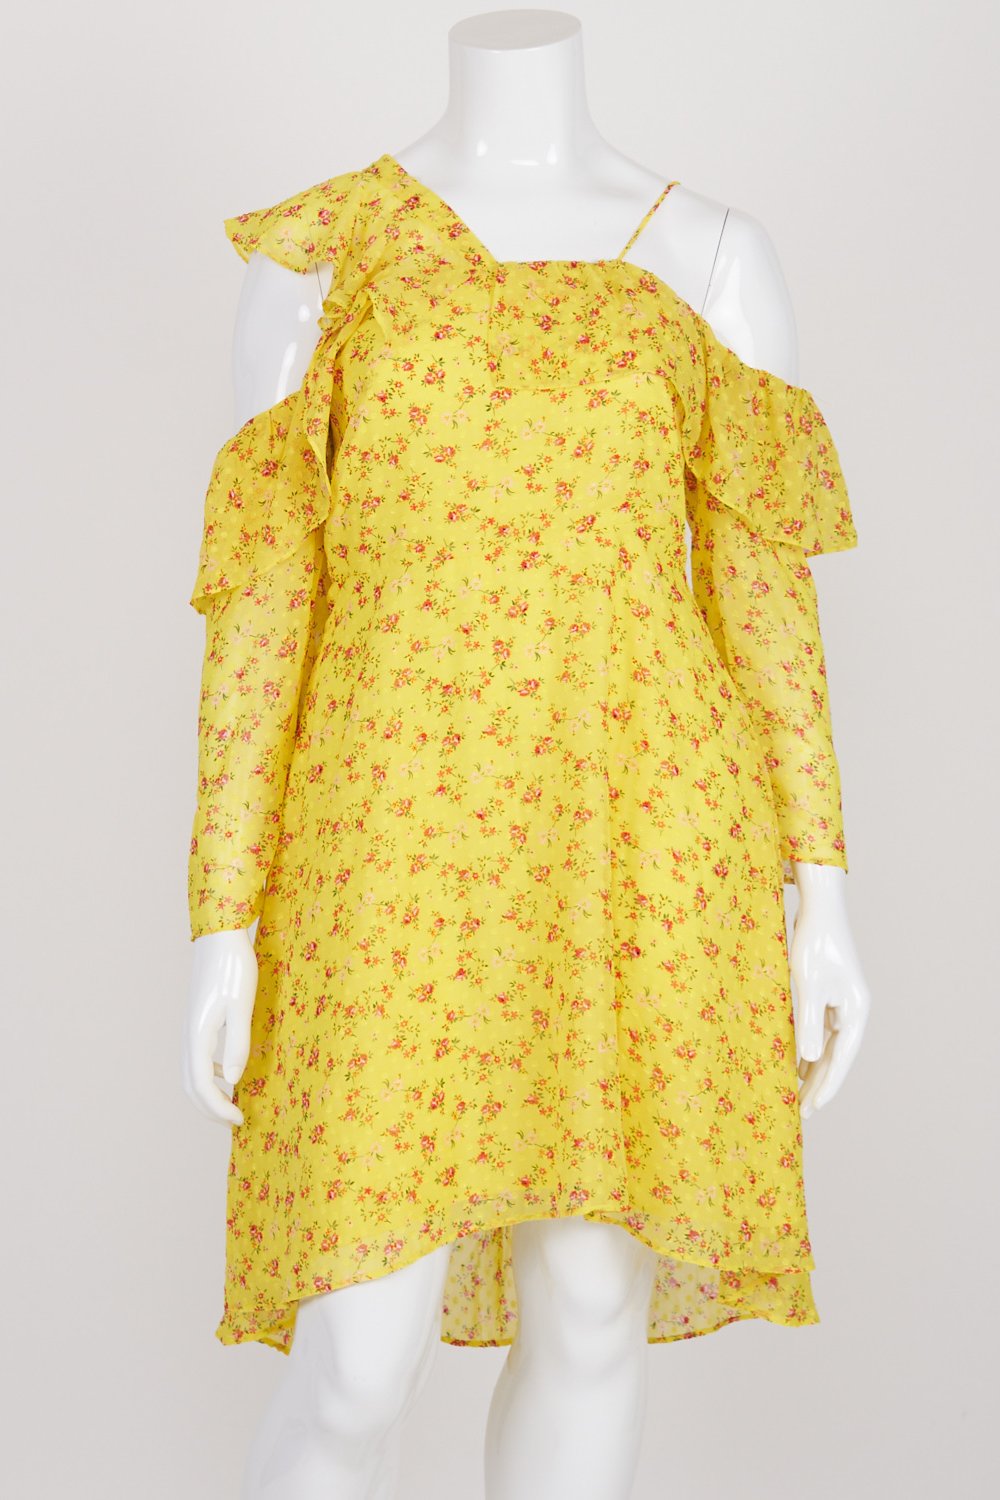 ASOS Yellow Floral Midi Dress